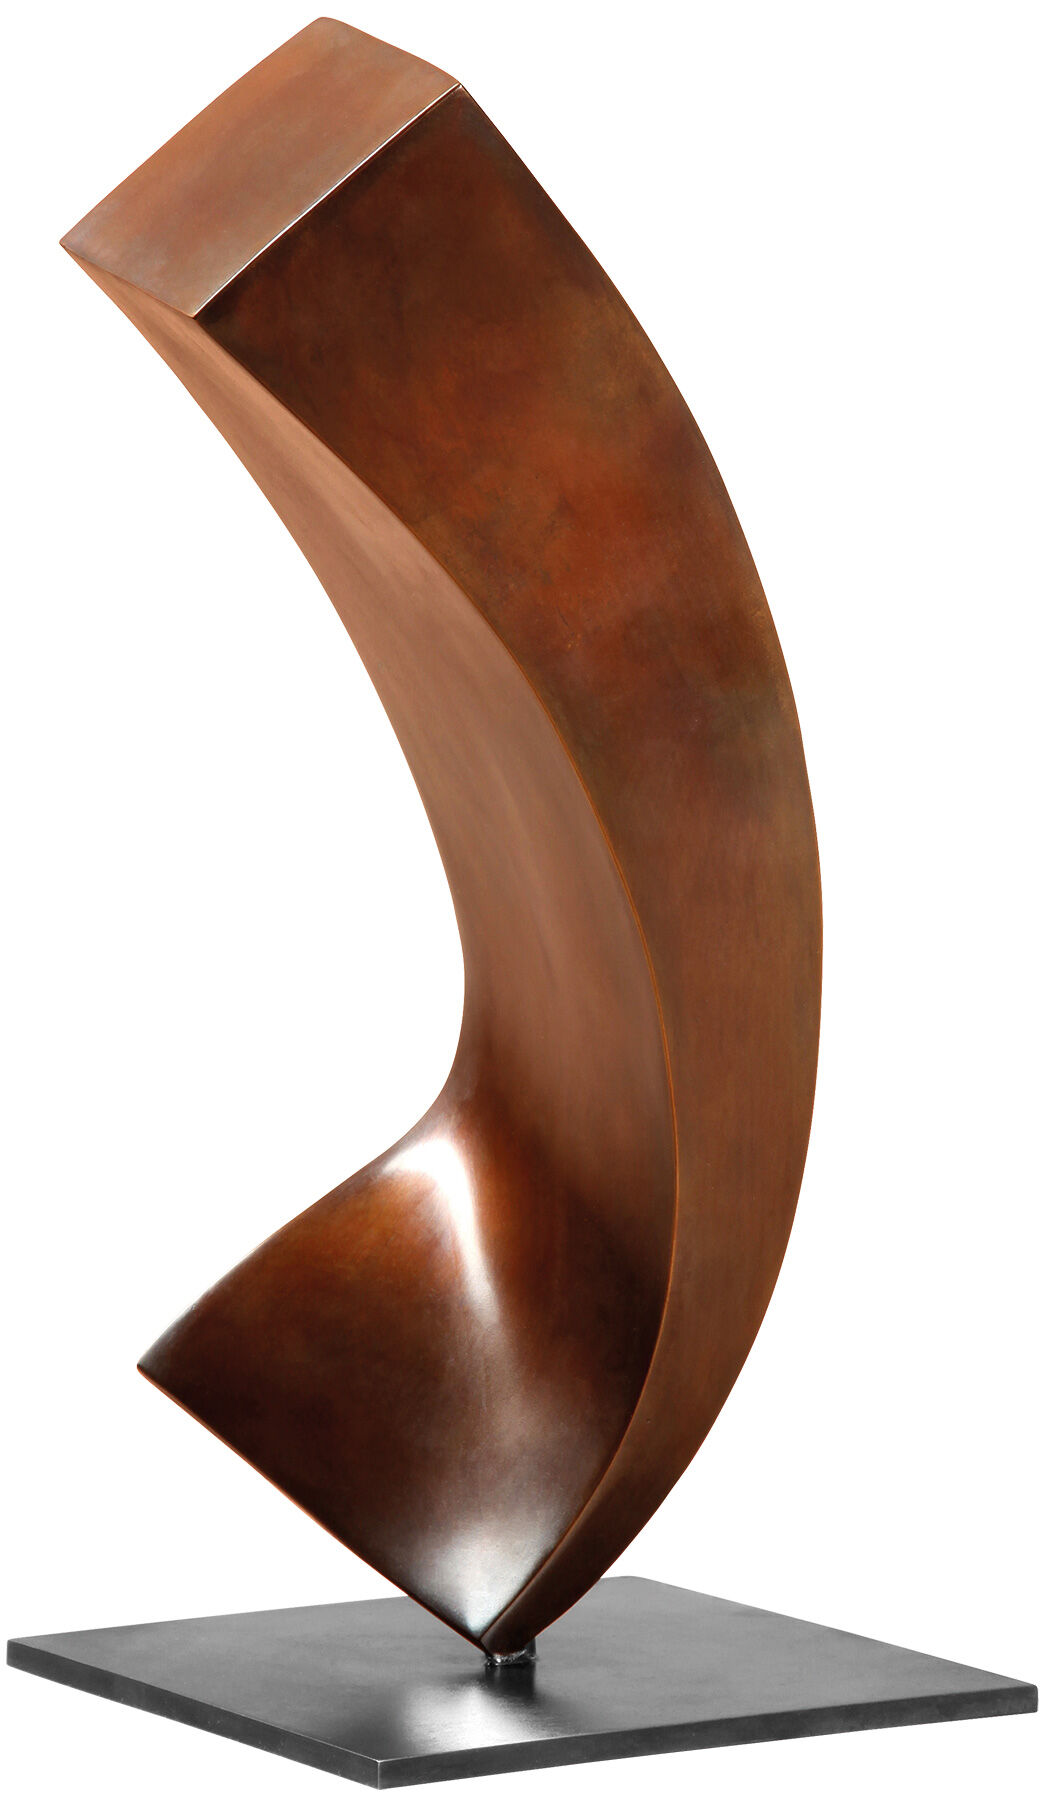 Sculpture "Expectation" (2013), bronze by Gábor Török